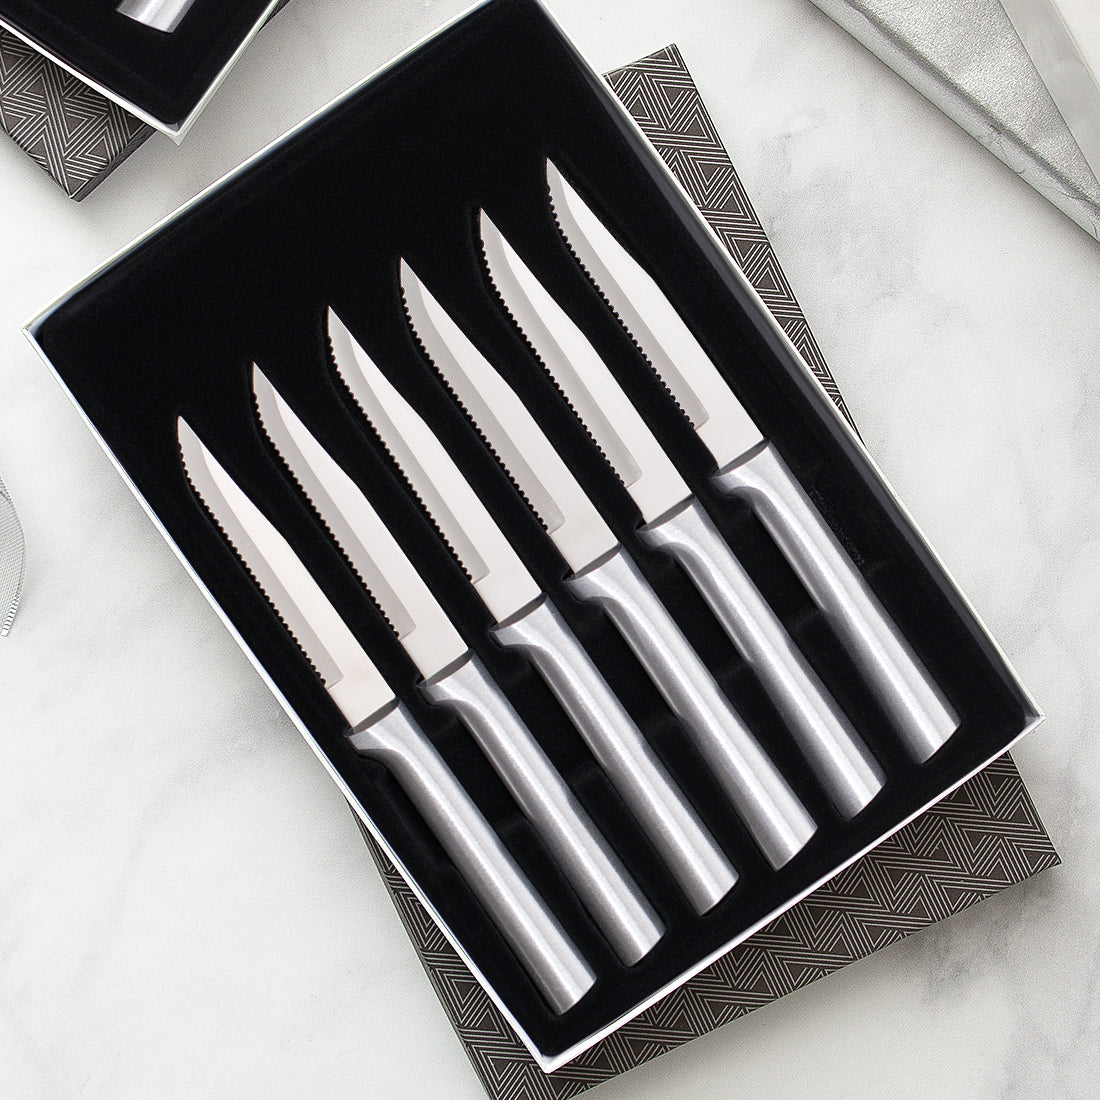 Rada Cutlery Utility Steak Knives Gift Set – Stainless Steel Knife , Set of  6 